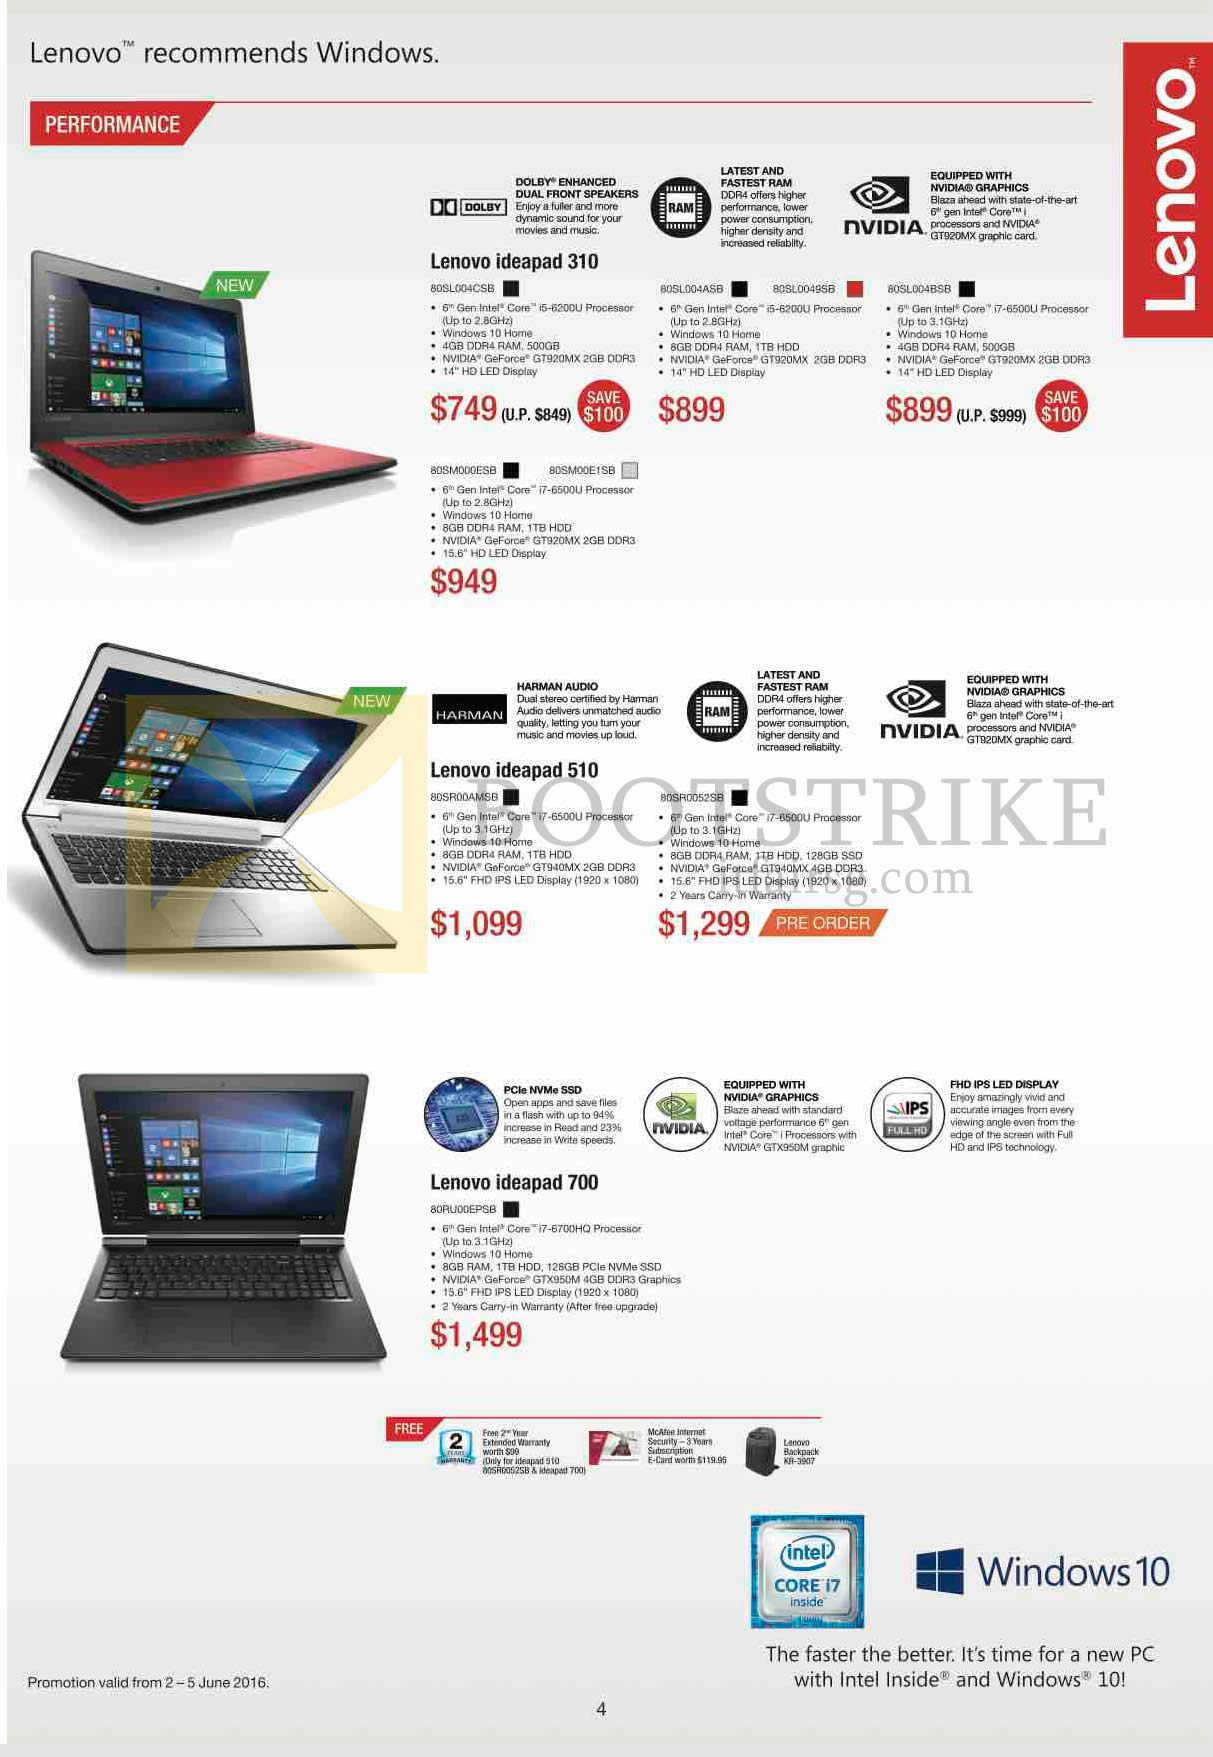 PC SHOW 2016 price list image brochure of Lenovo Notebooks Ideapad 310, 510, 700